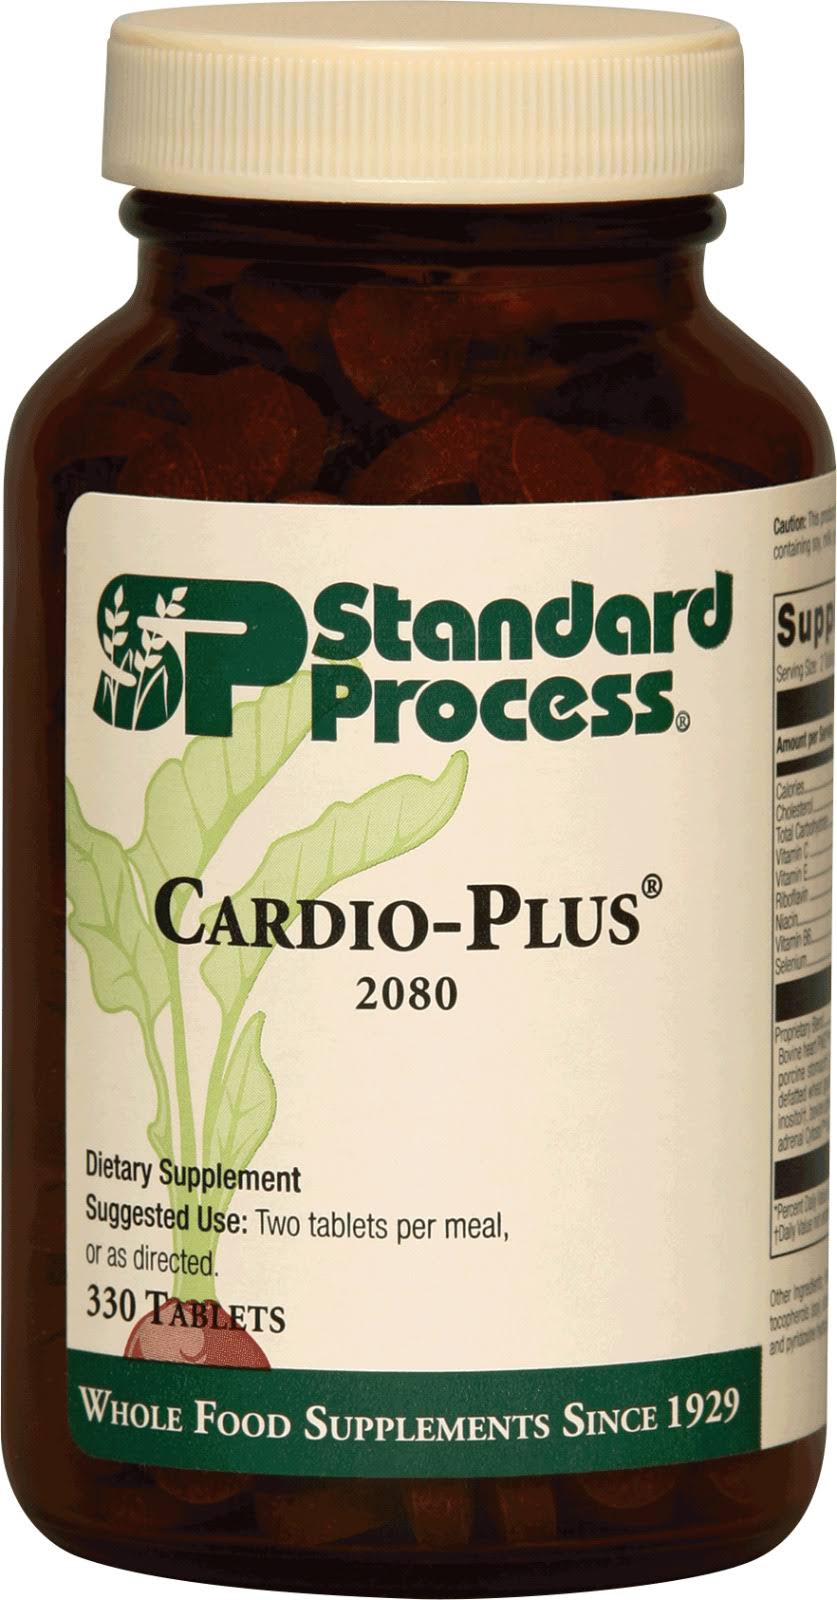 Standard Process Cardio Plus #2080 Supplement - 330 Tablets